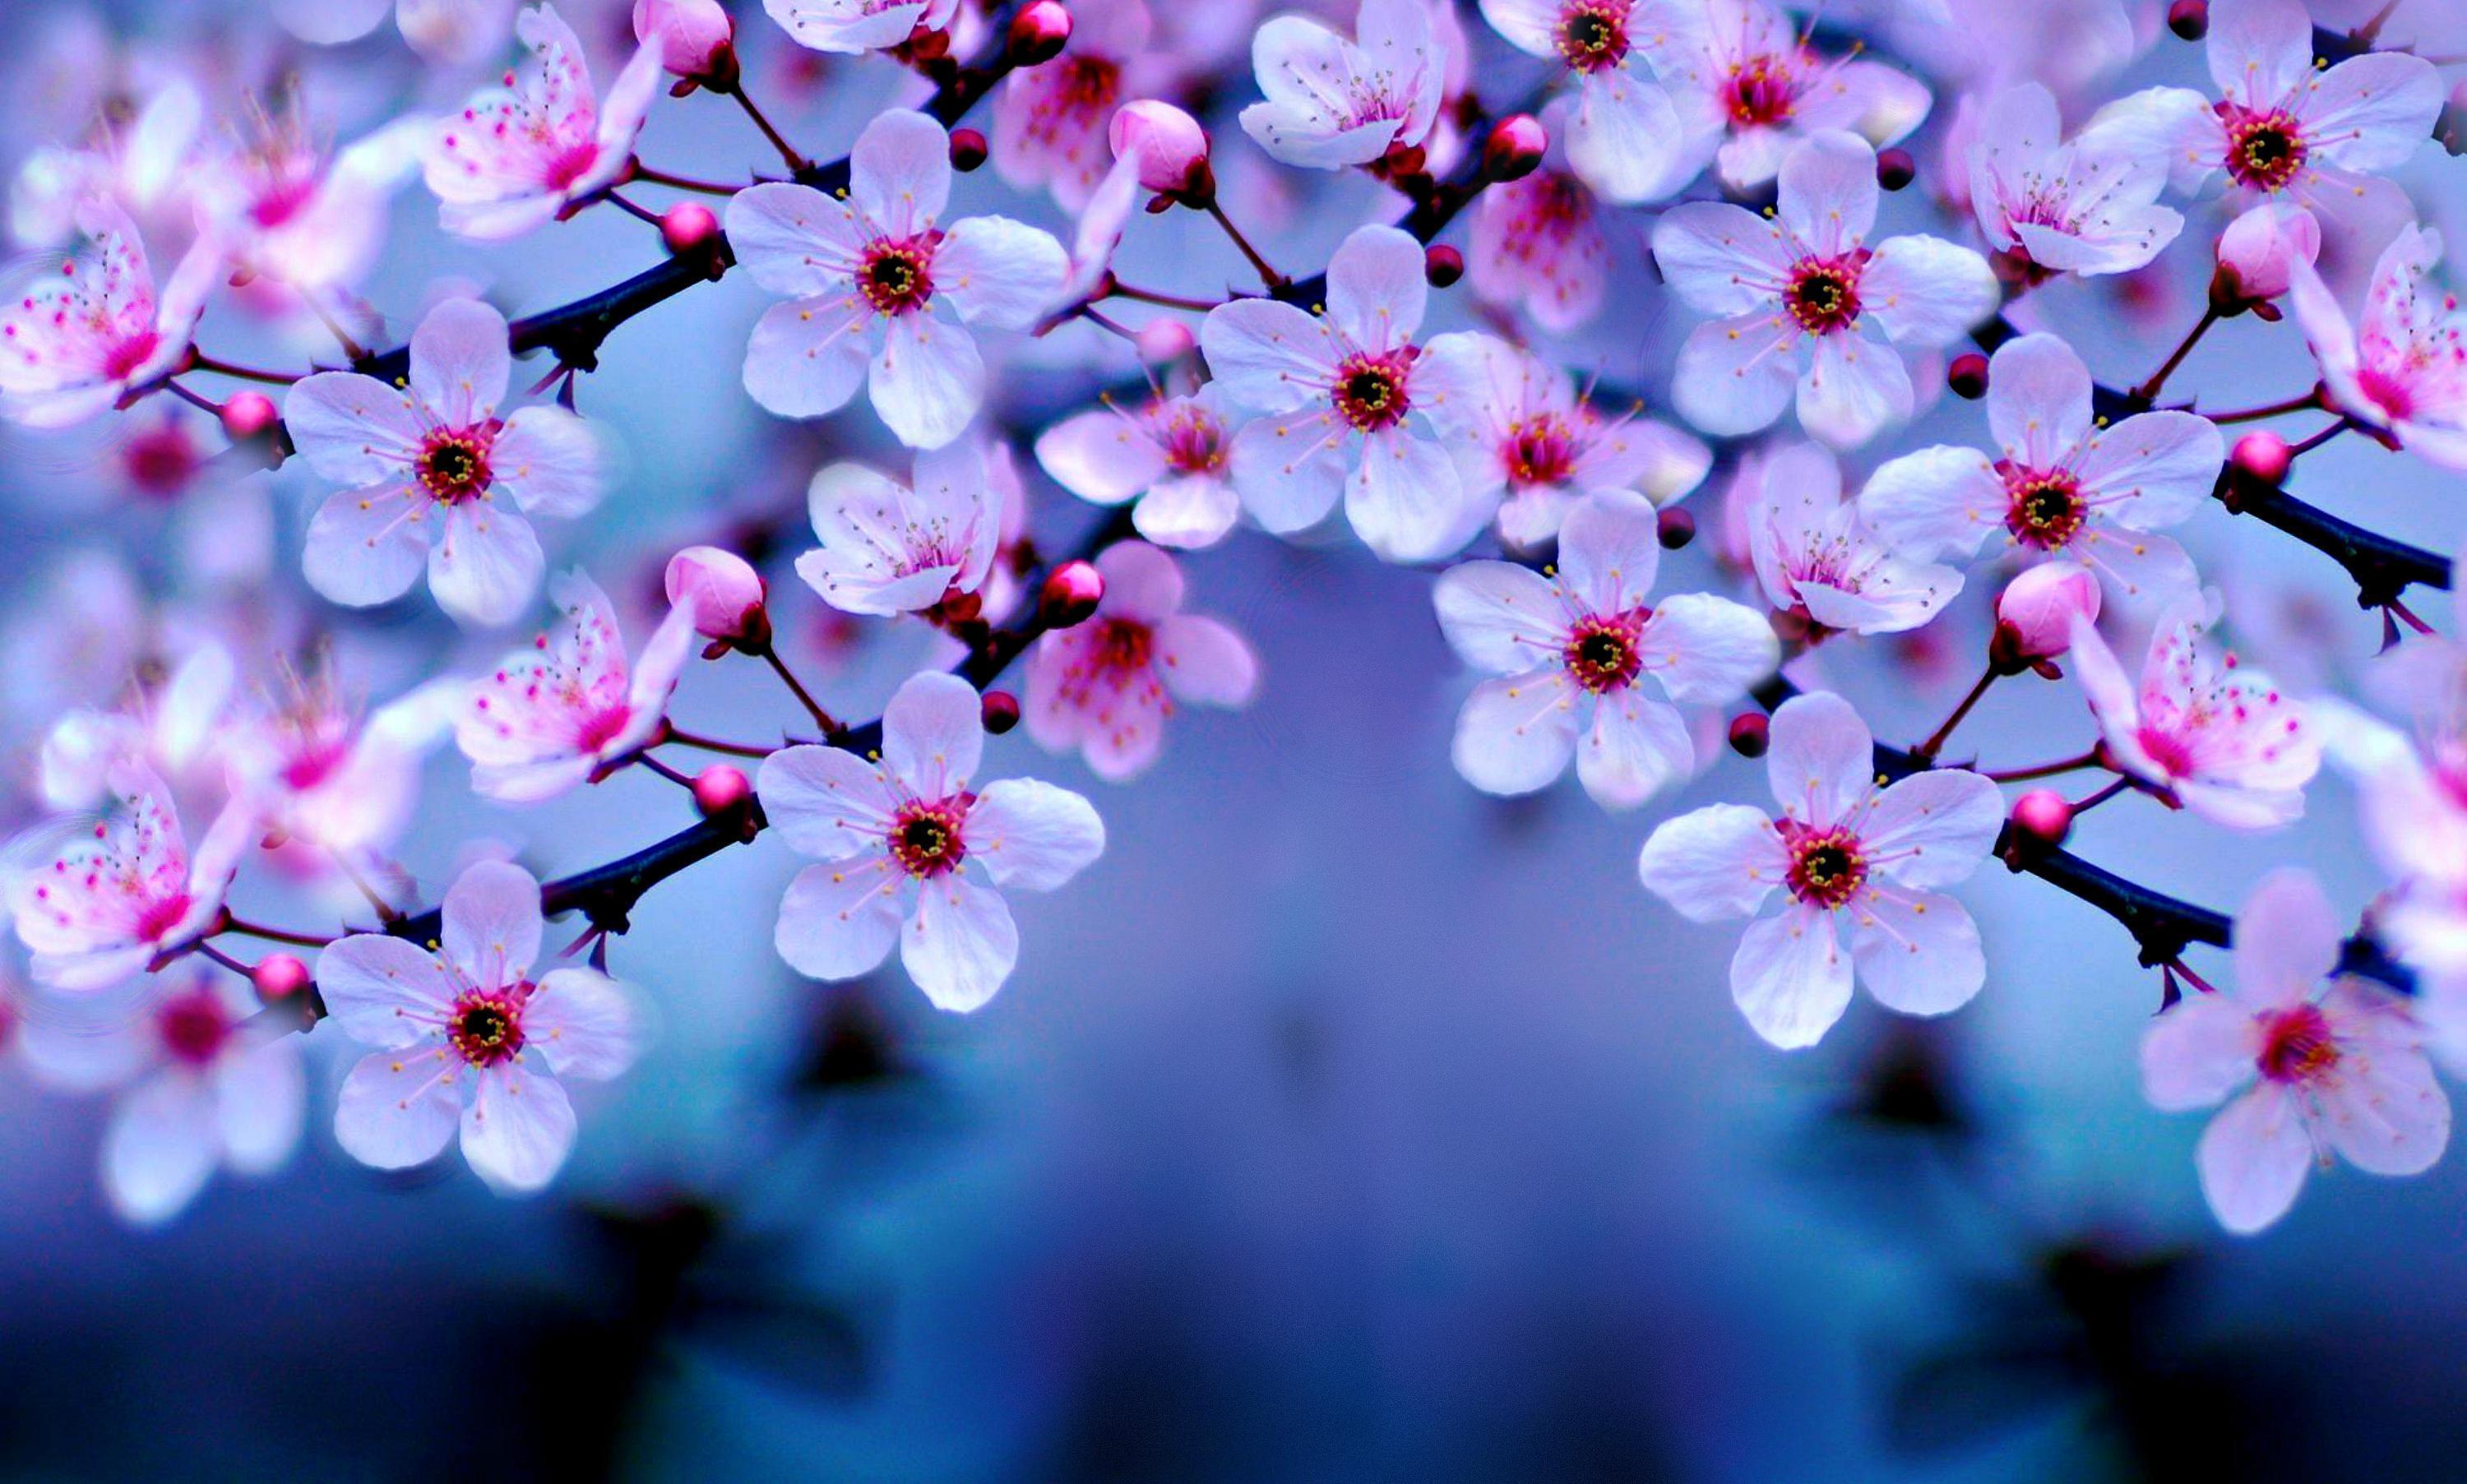 Cherry Blossom Desktop Backgrounds Wallpaper Cave